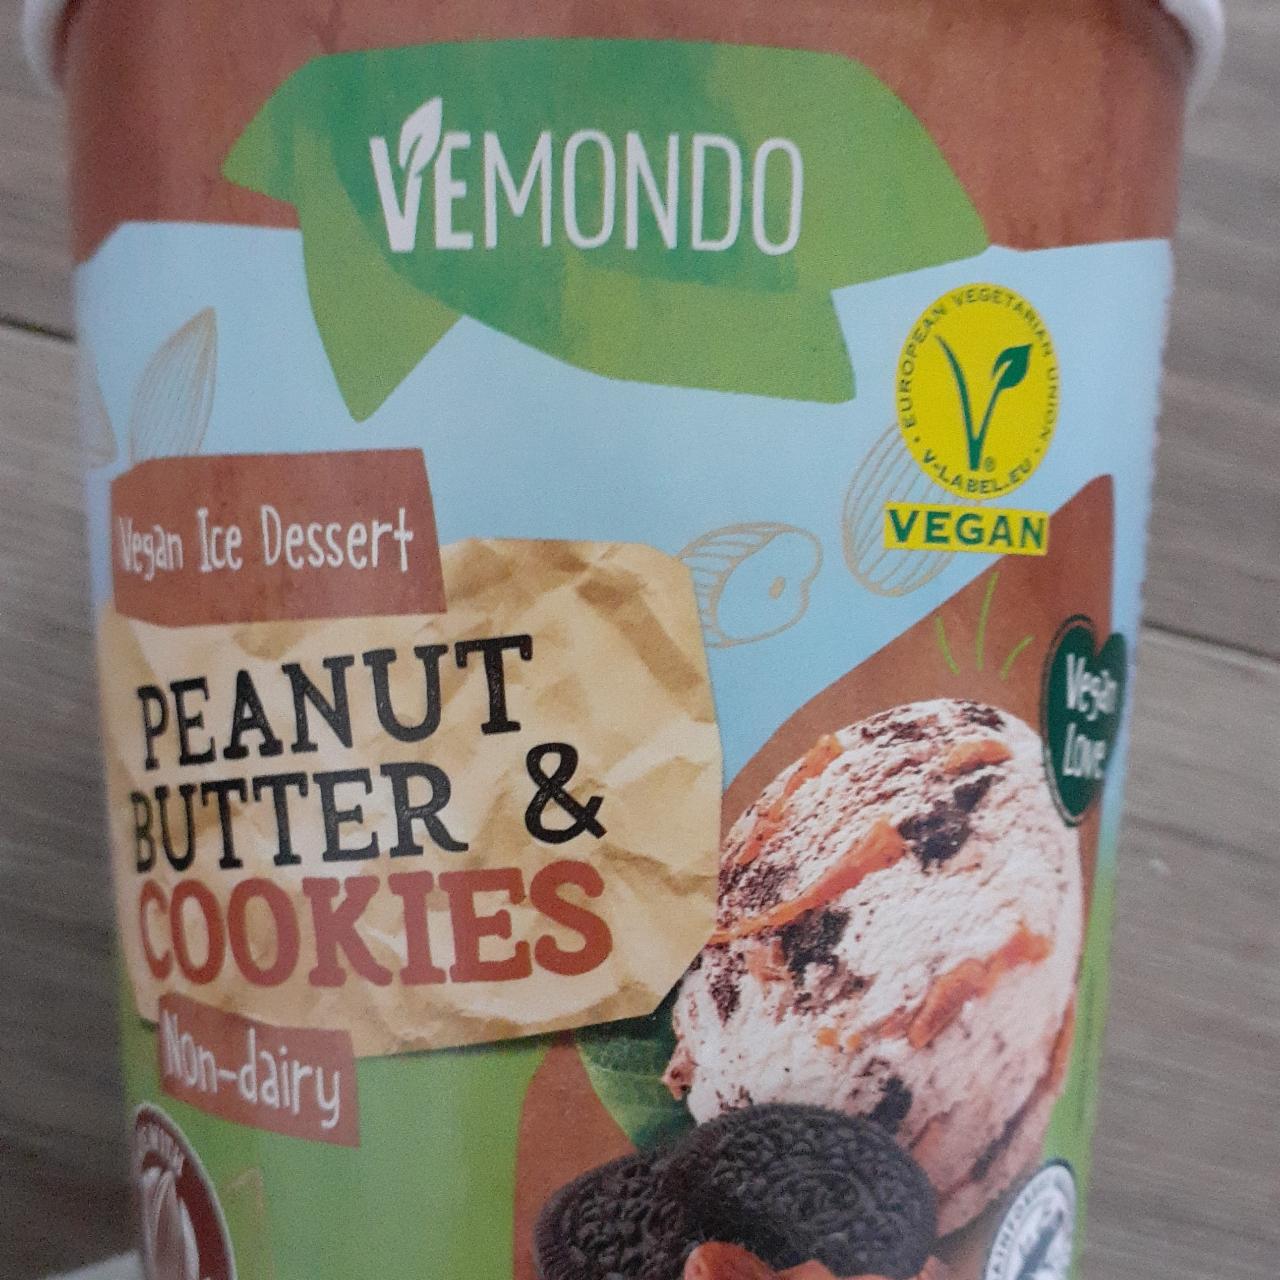 Fotografie - vegan Ice Dessert Peanut Butter Cookies Vemondo